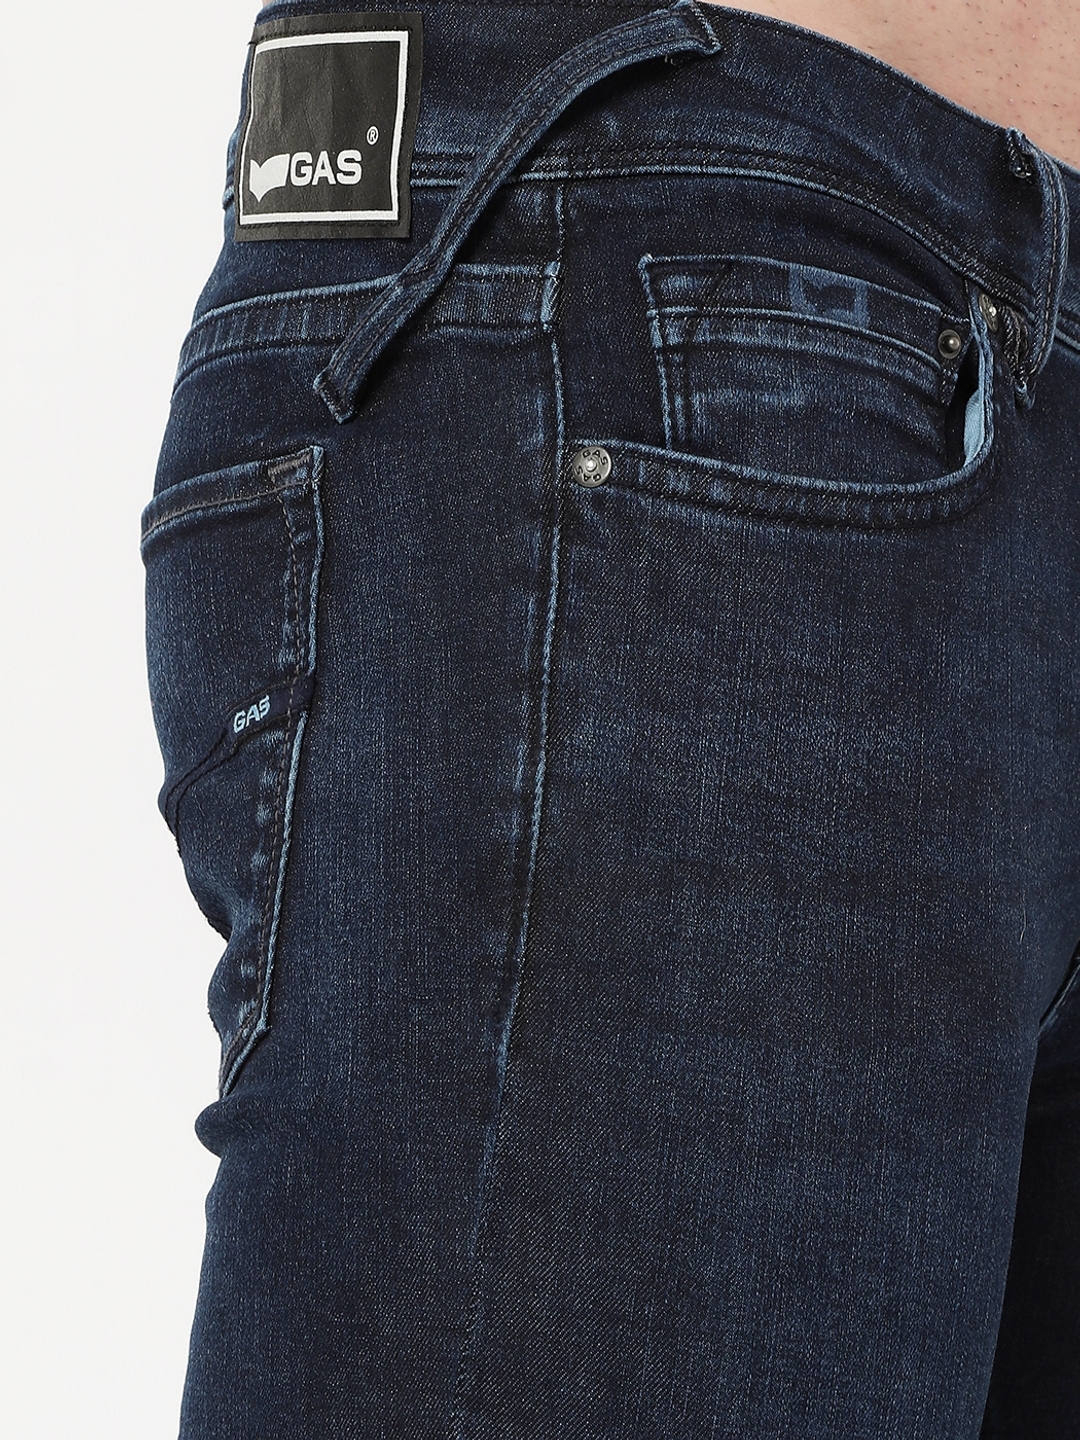 Men's Sax Zip Skinny Fit Jeans